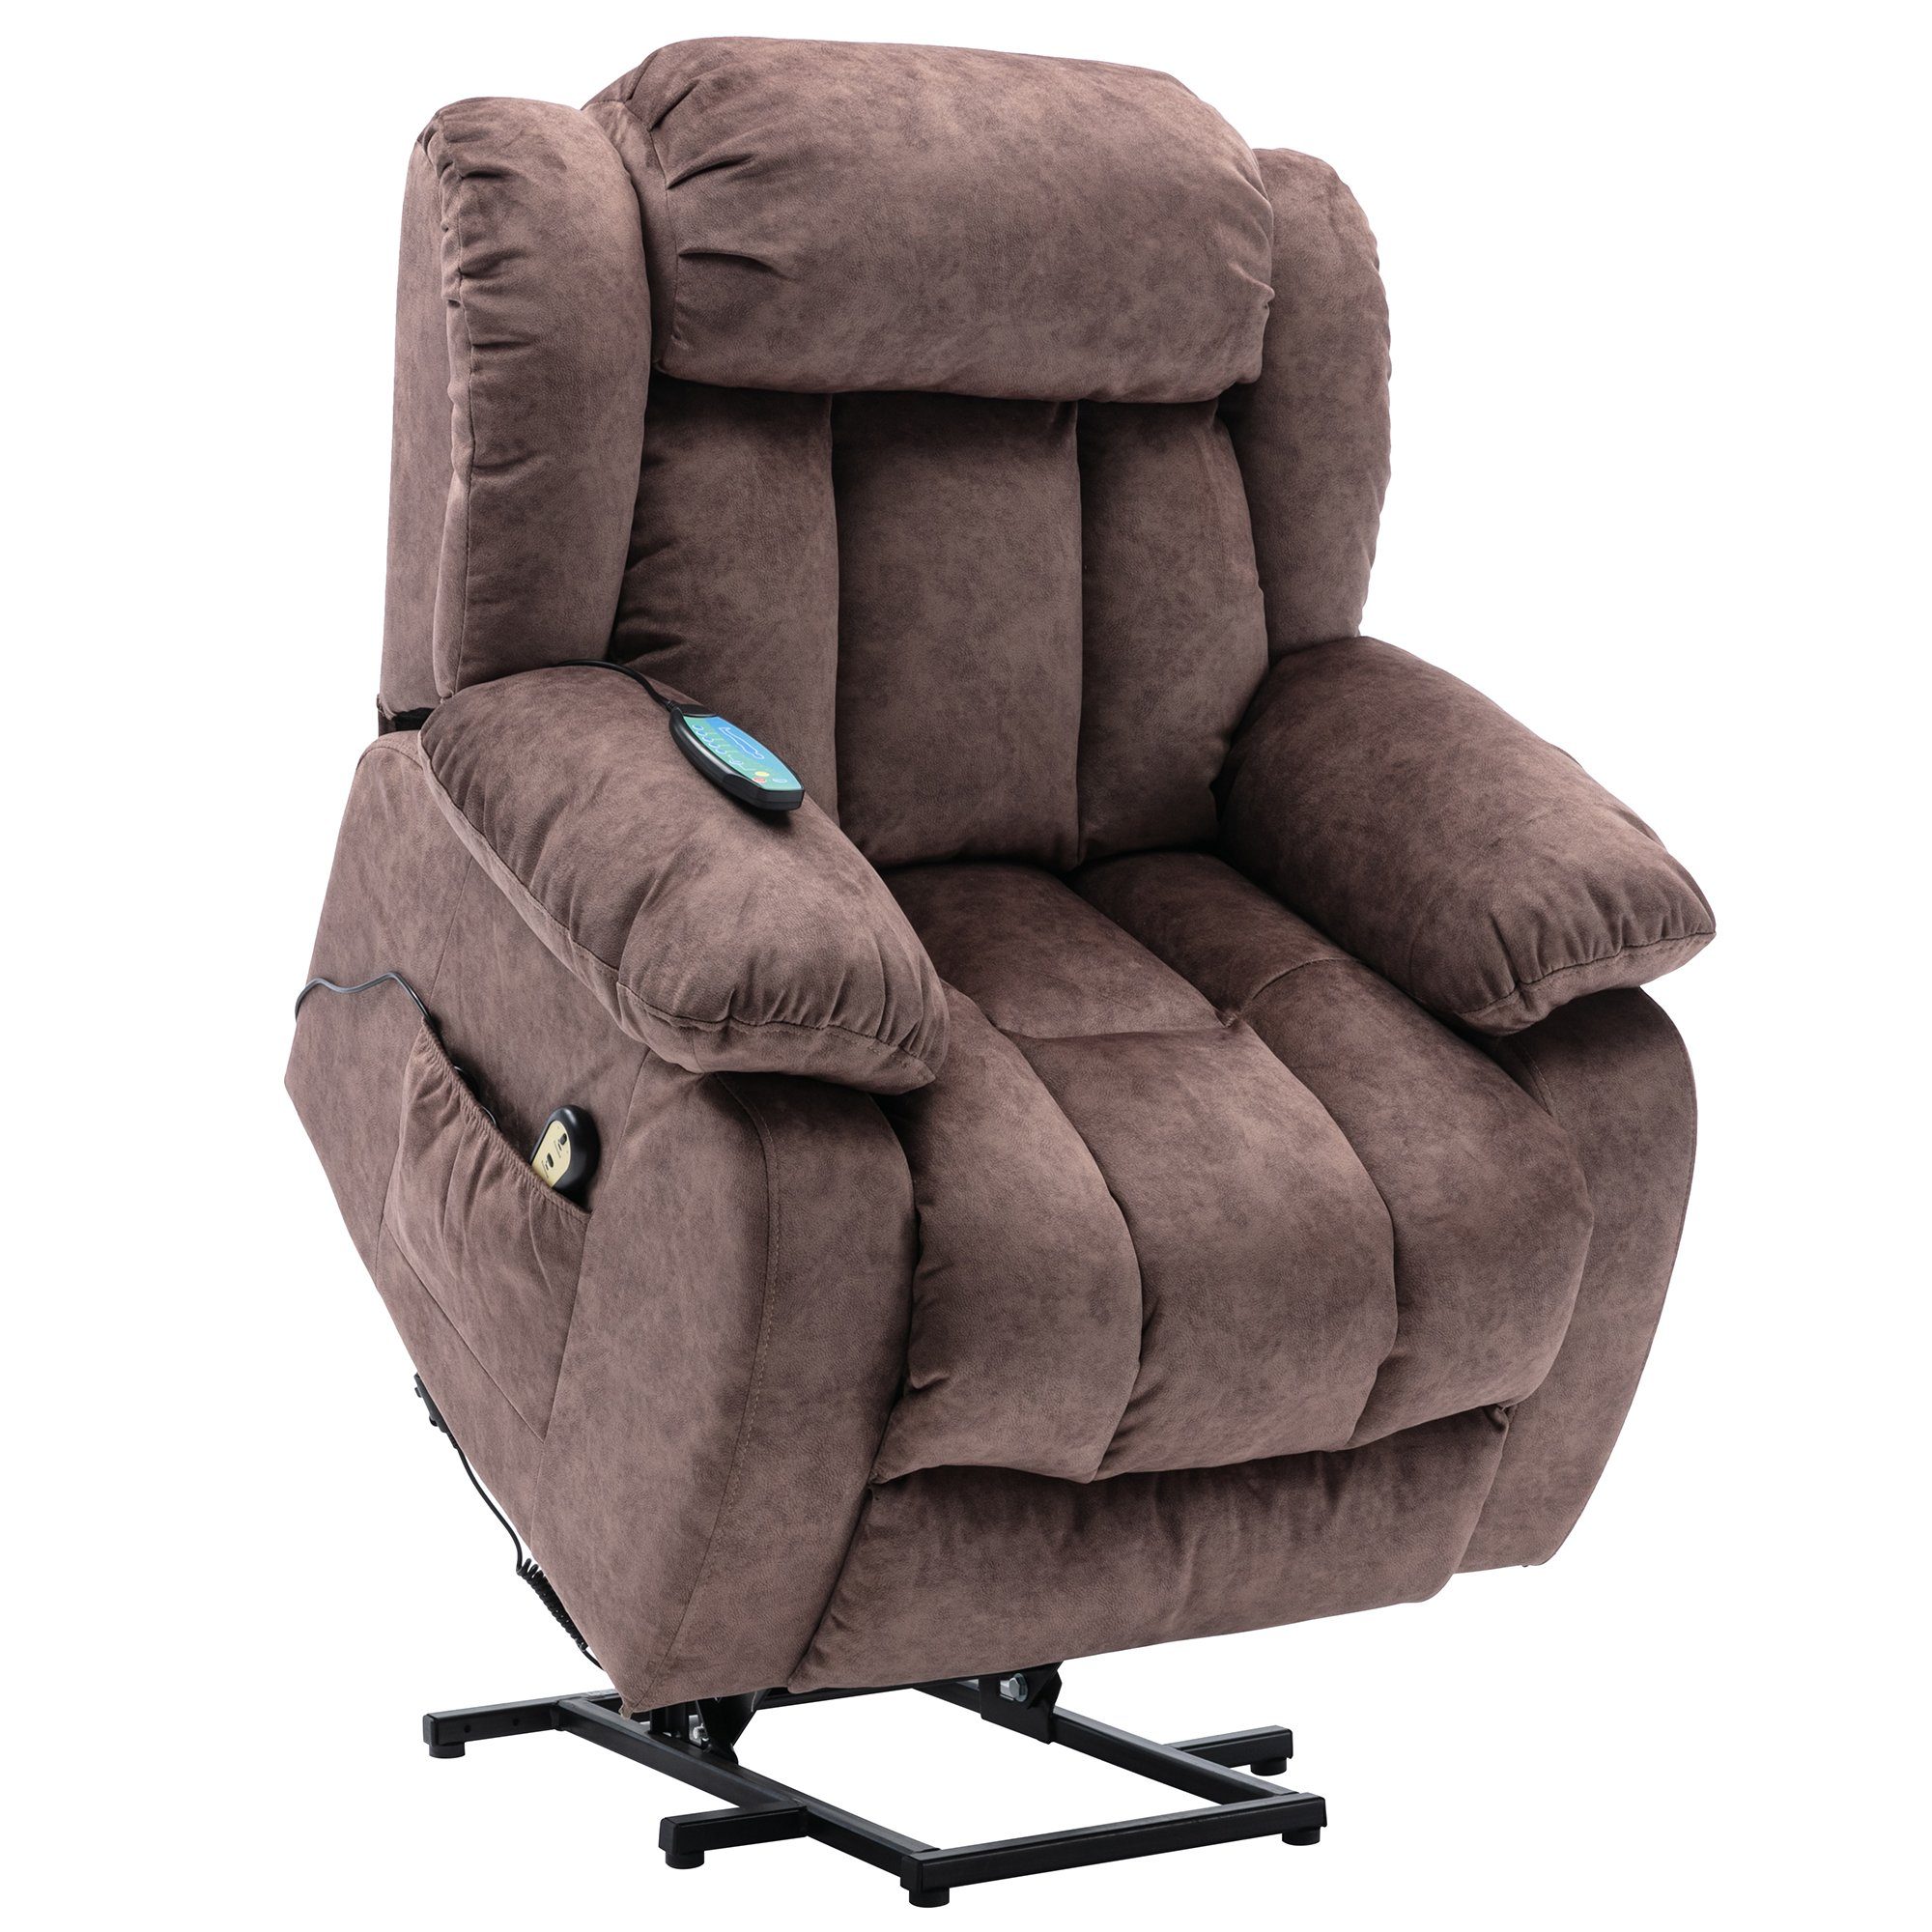 Merax TV-Sessel, Massagesesel mit Wärme und Vibration, USB-verstellbar, beheizt